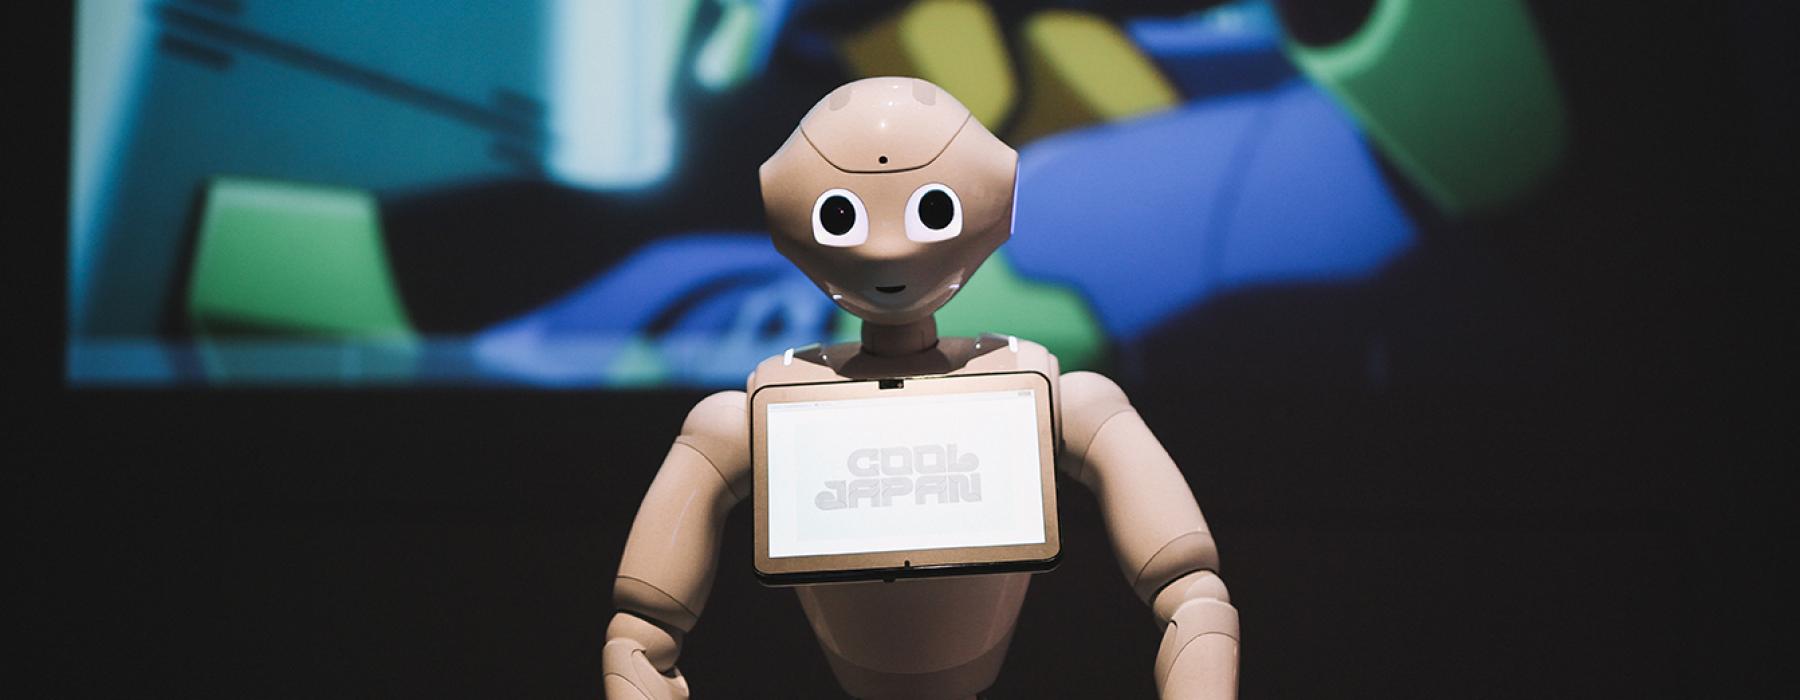 Pepper, robot, cool japan, tropenmuseum